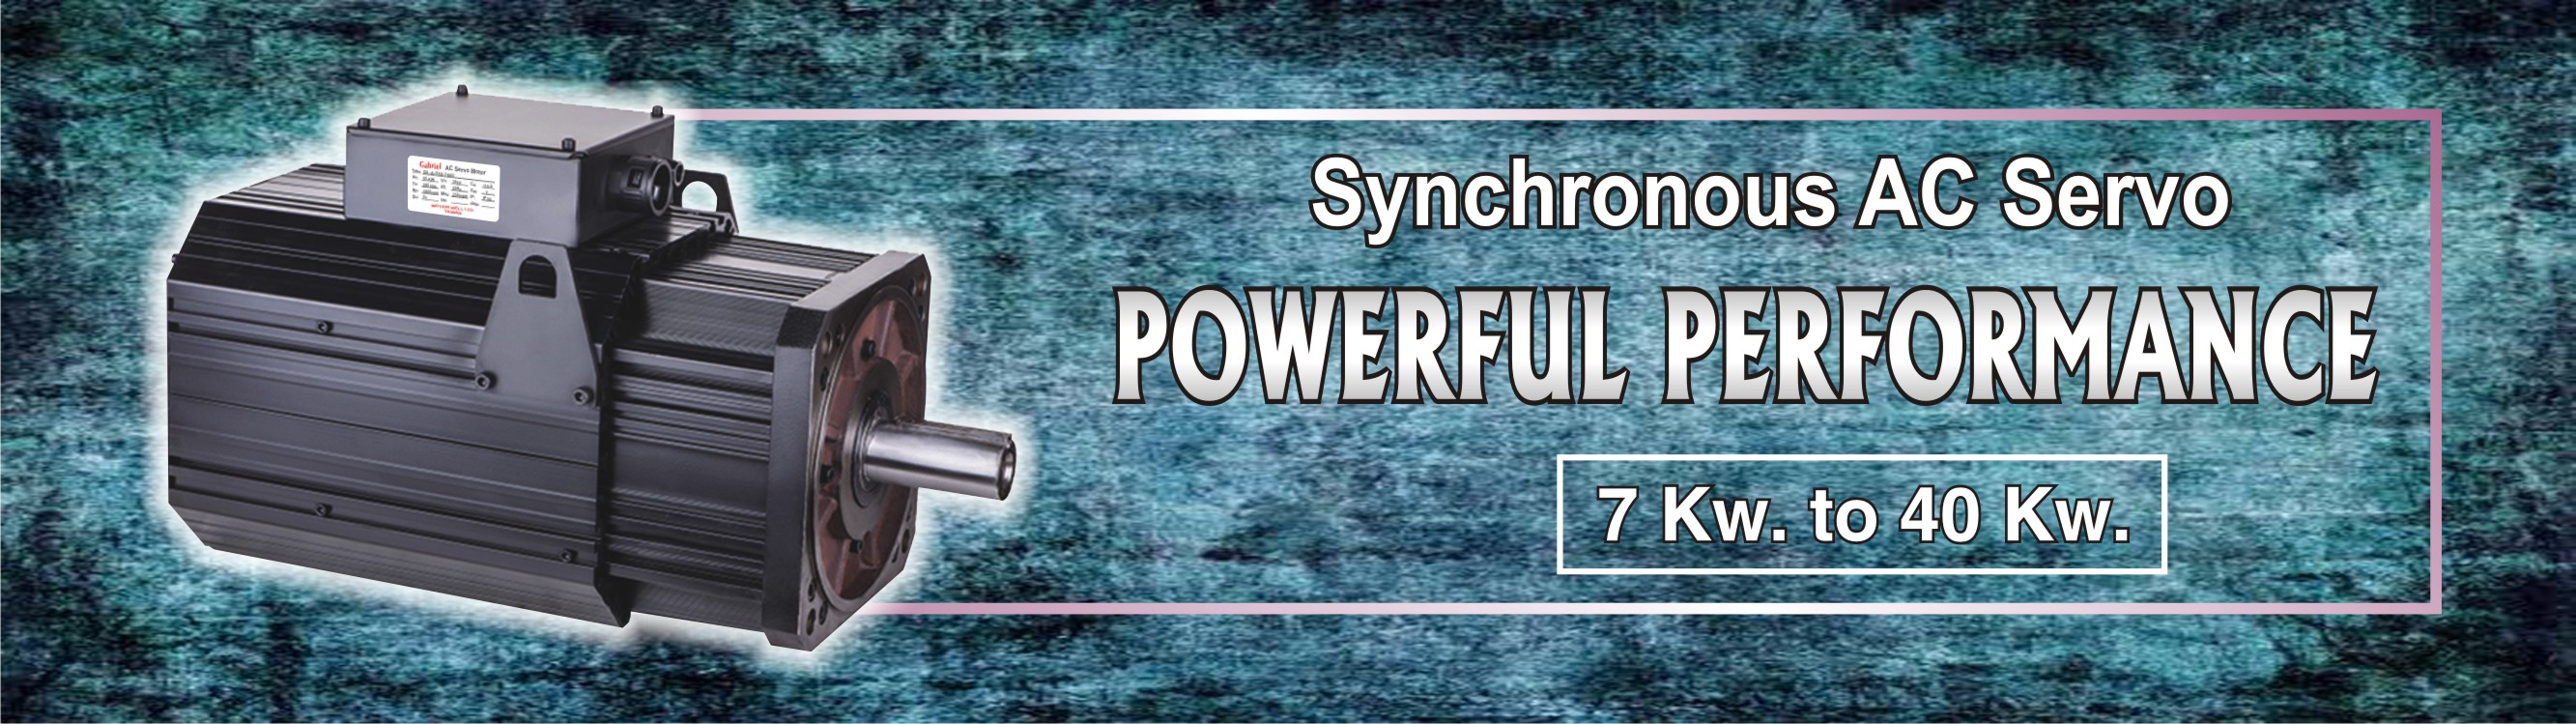 Synchronous AC Servo - Powerful Performance 7 kw. to 40 kw. - Motion Well LTD